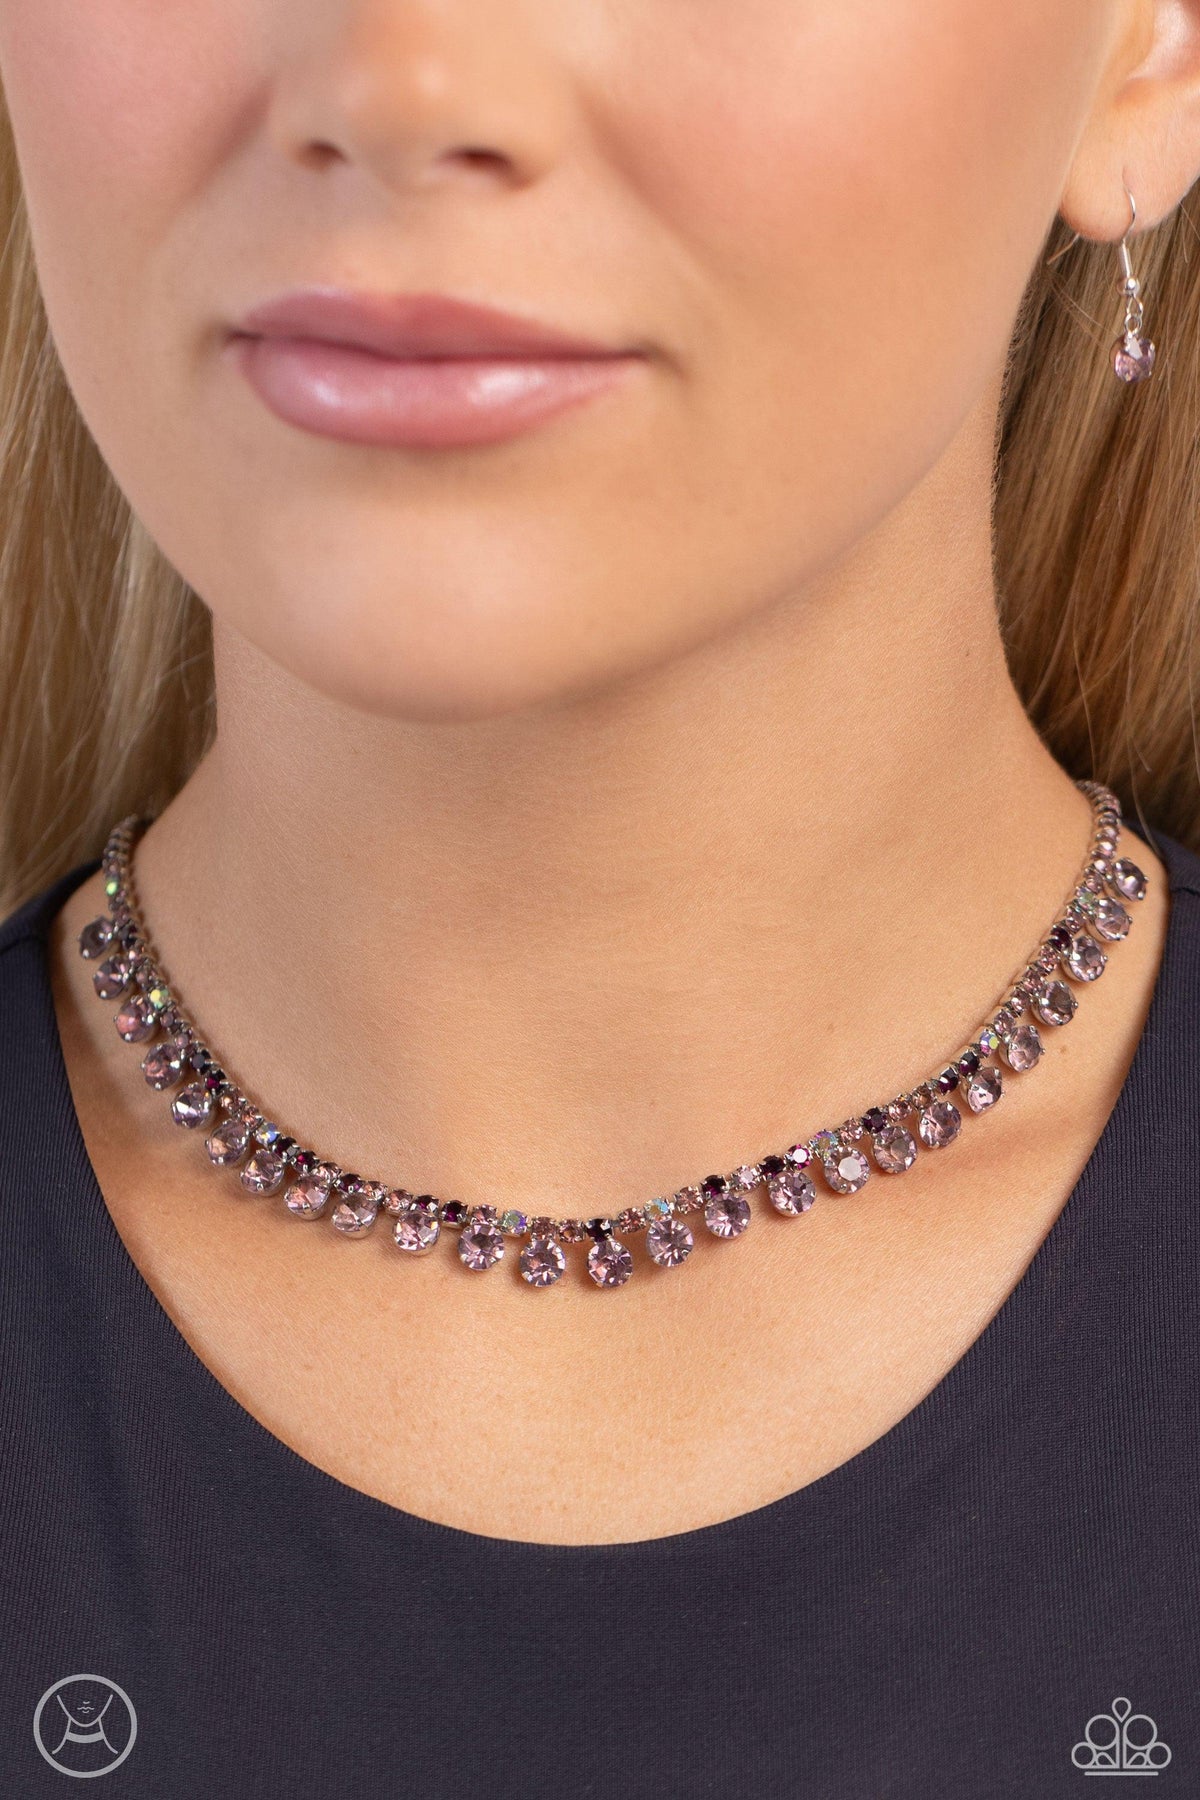 Ritzy Rhinestones Purple Choker Necklace - Paparazzi Accessories-on model - CarasShop.com - $5 Jewelry by Cara Jewels